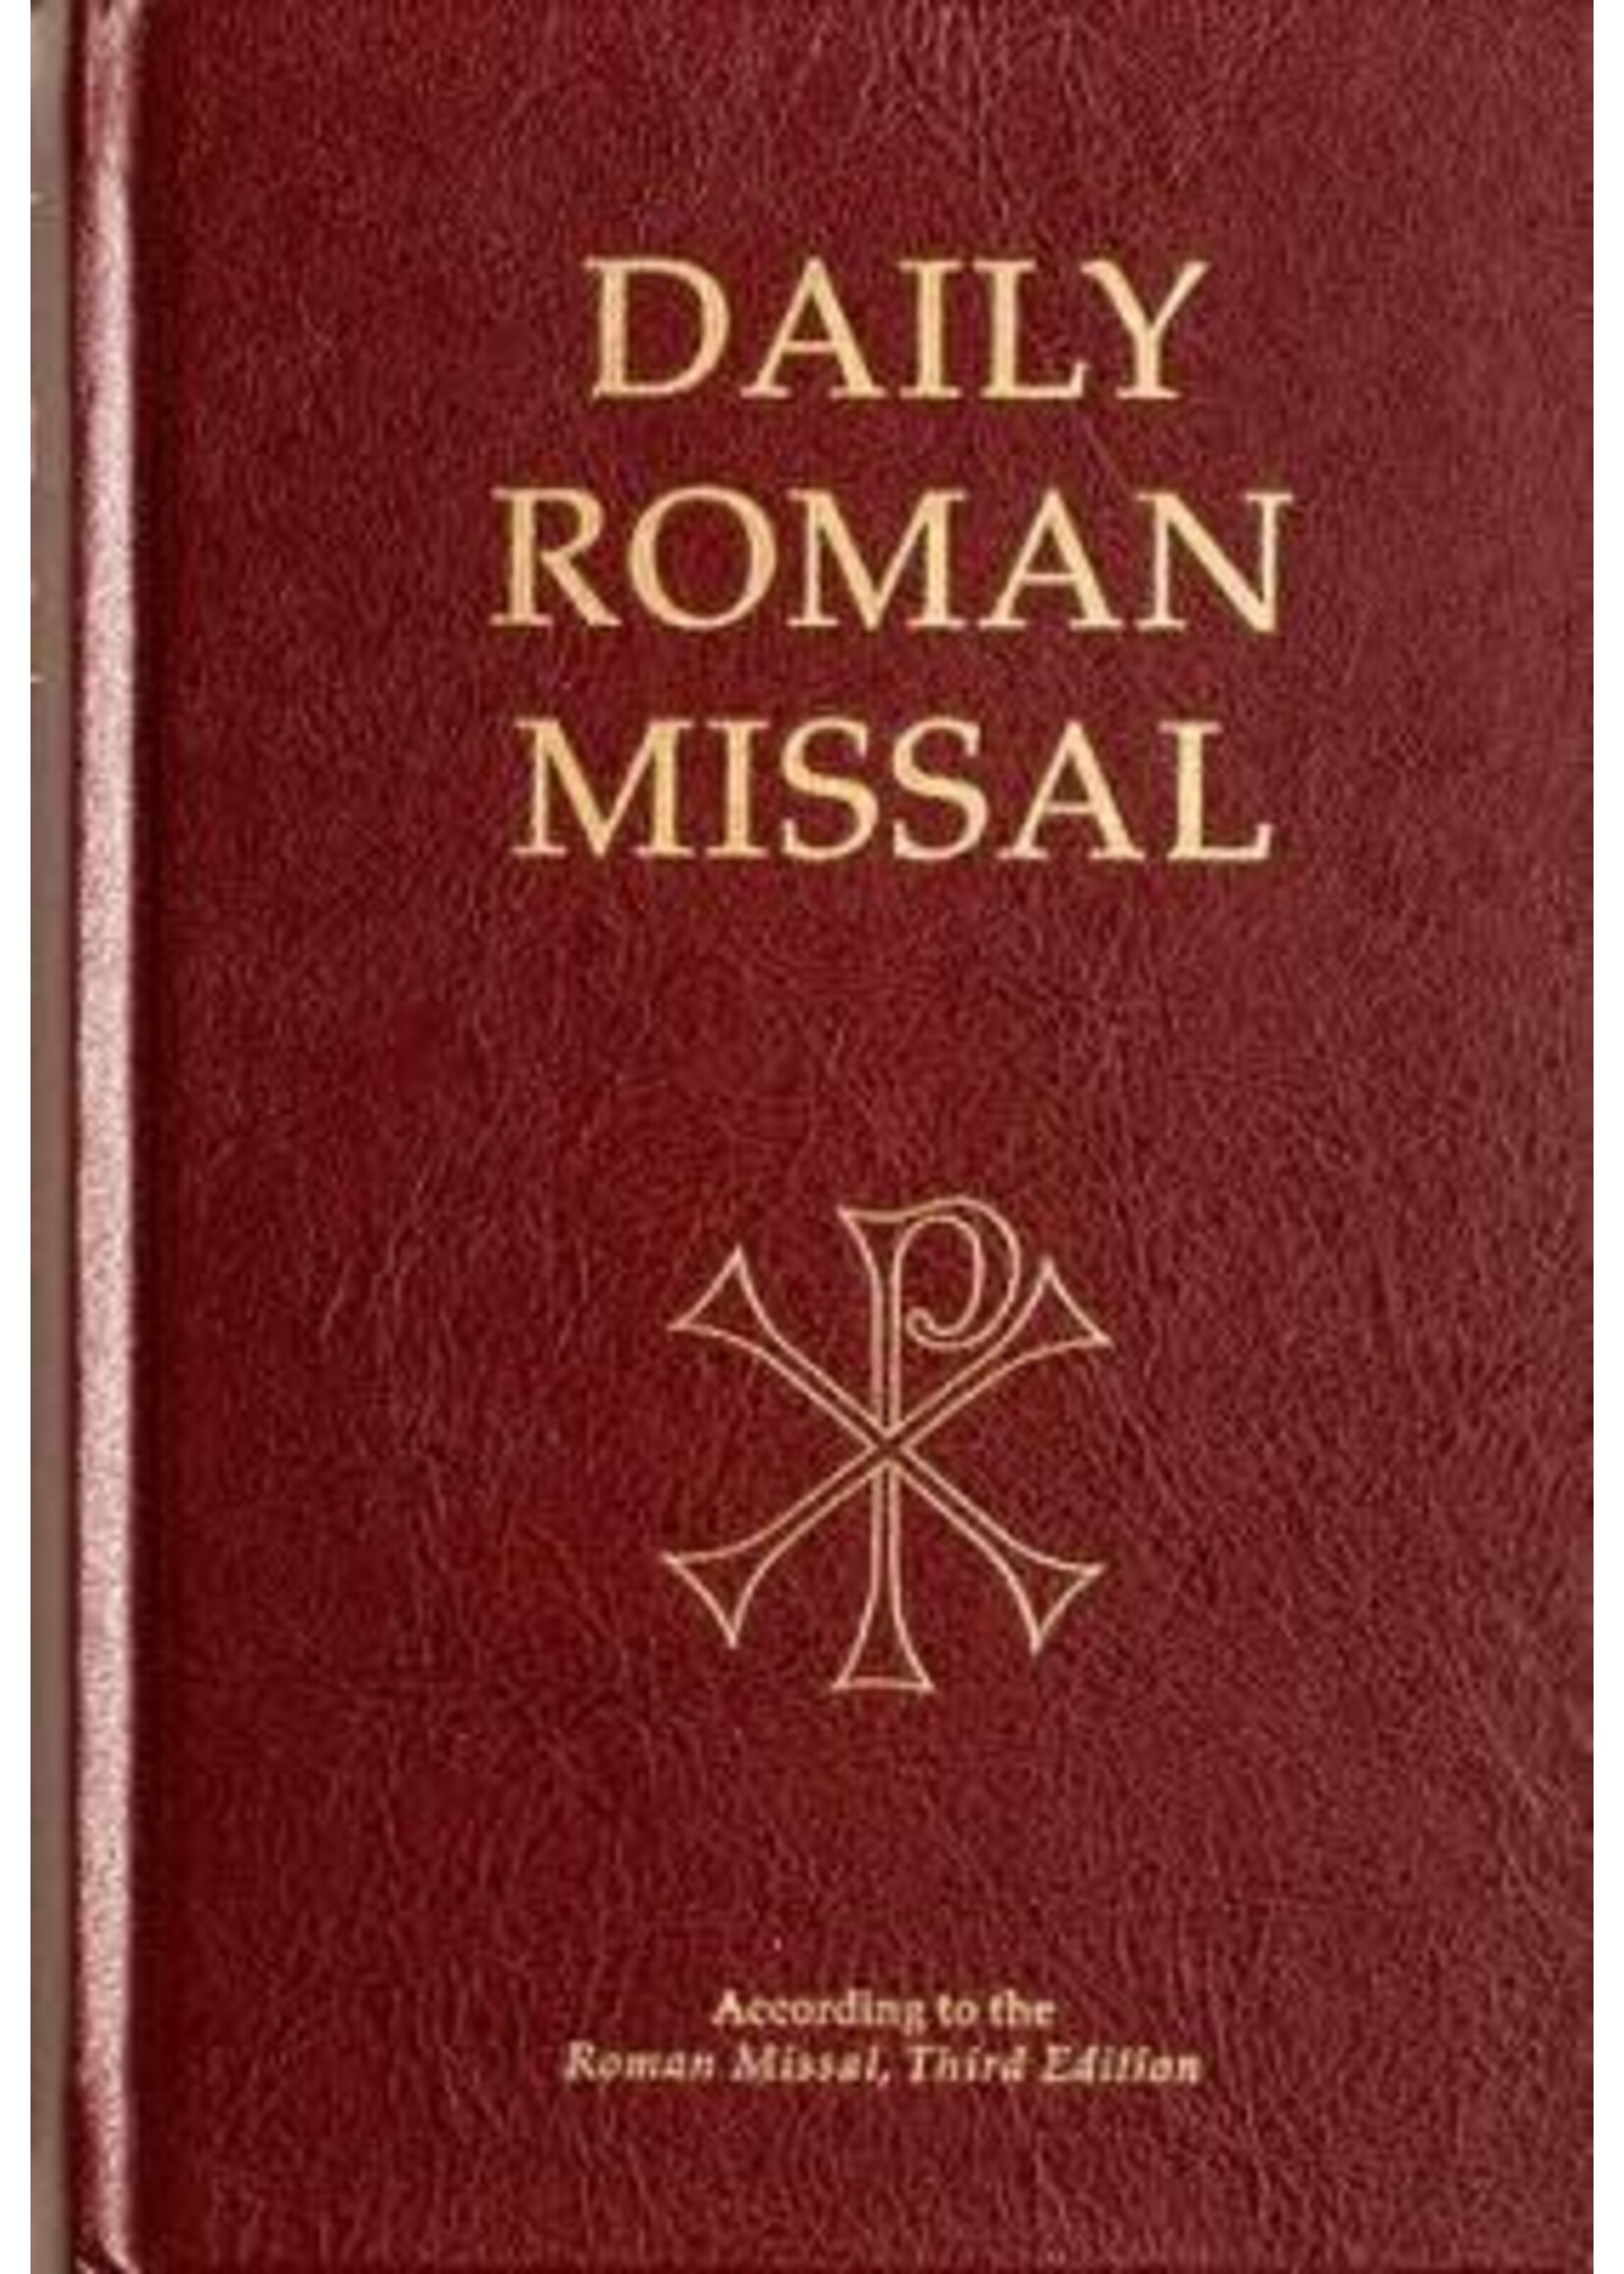 Daily Roman Missal, 7th Edition, Burgundy